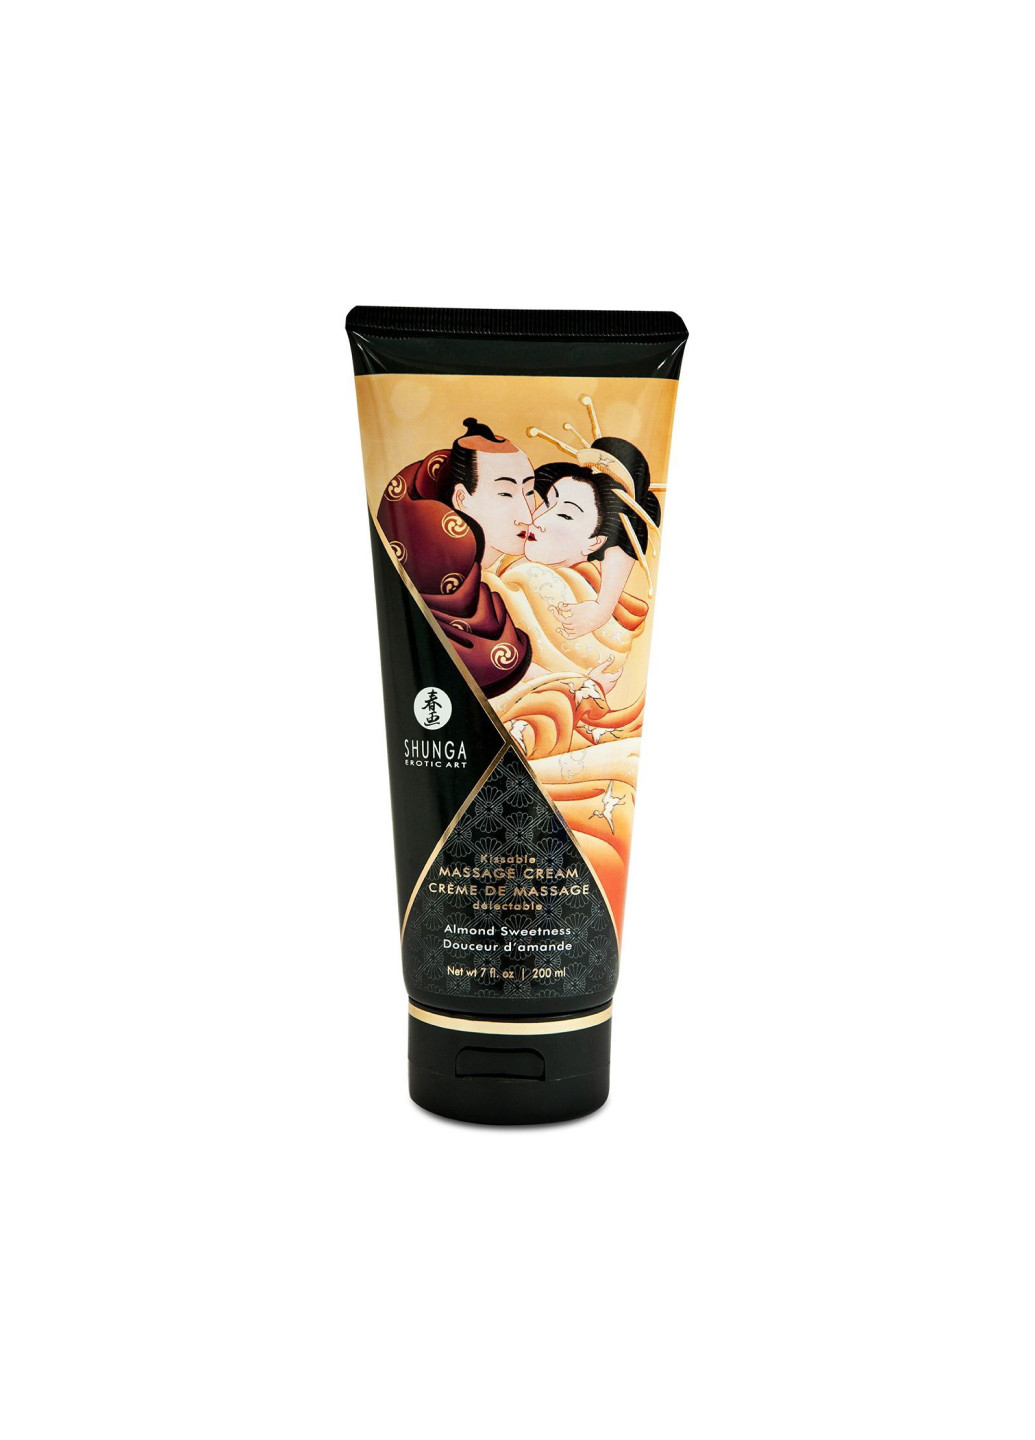 Съедобный массажный крем Kissable Massage Cream - Almond Sweetness (200 мл) Shunga (252431475)